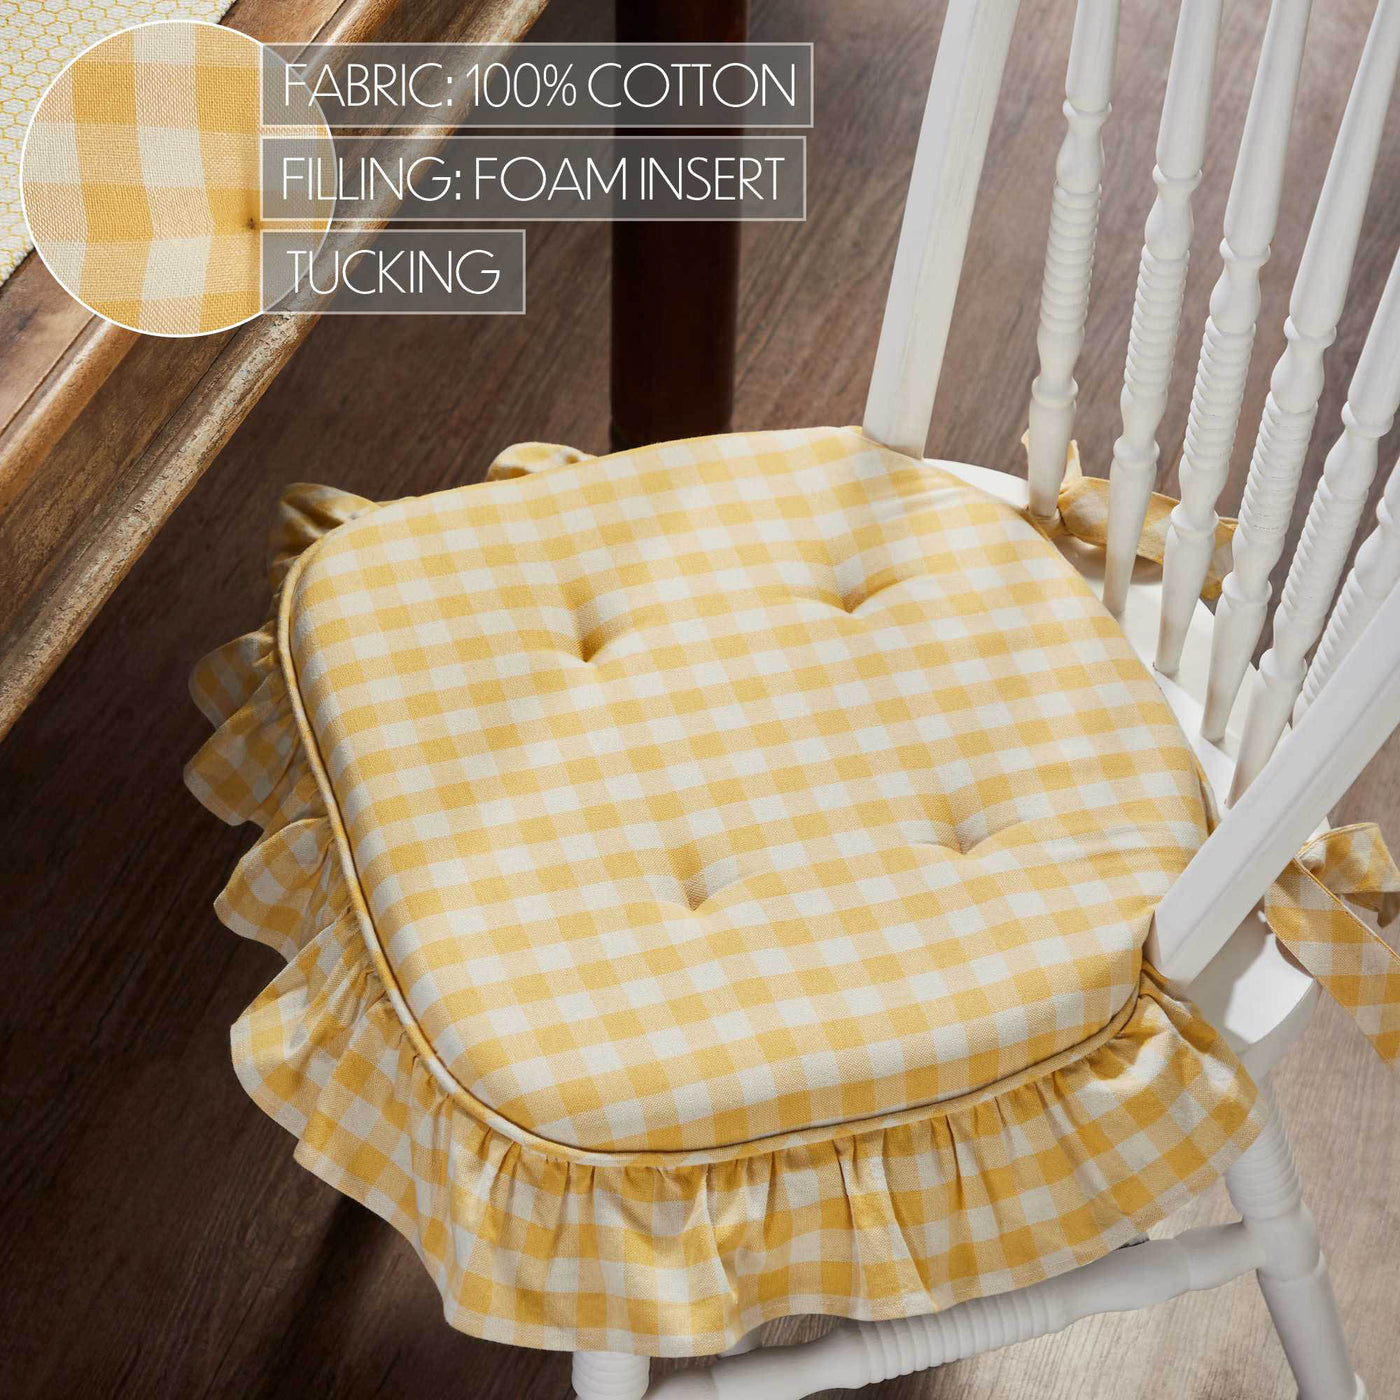 Golden Honey Ruffled Chair Pad 16.5" x 18"